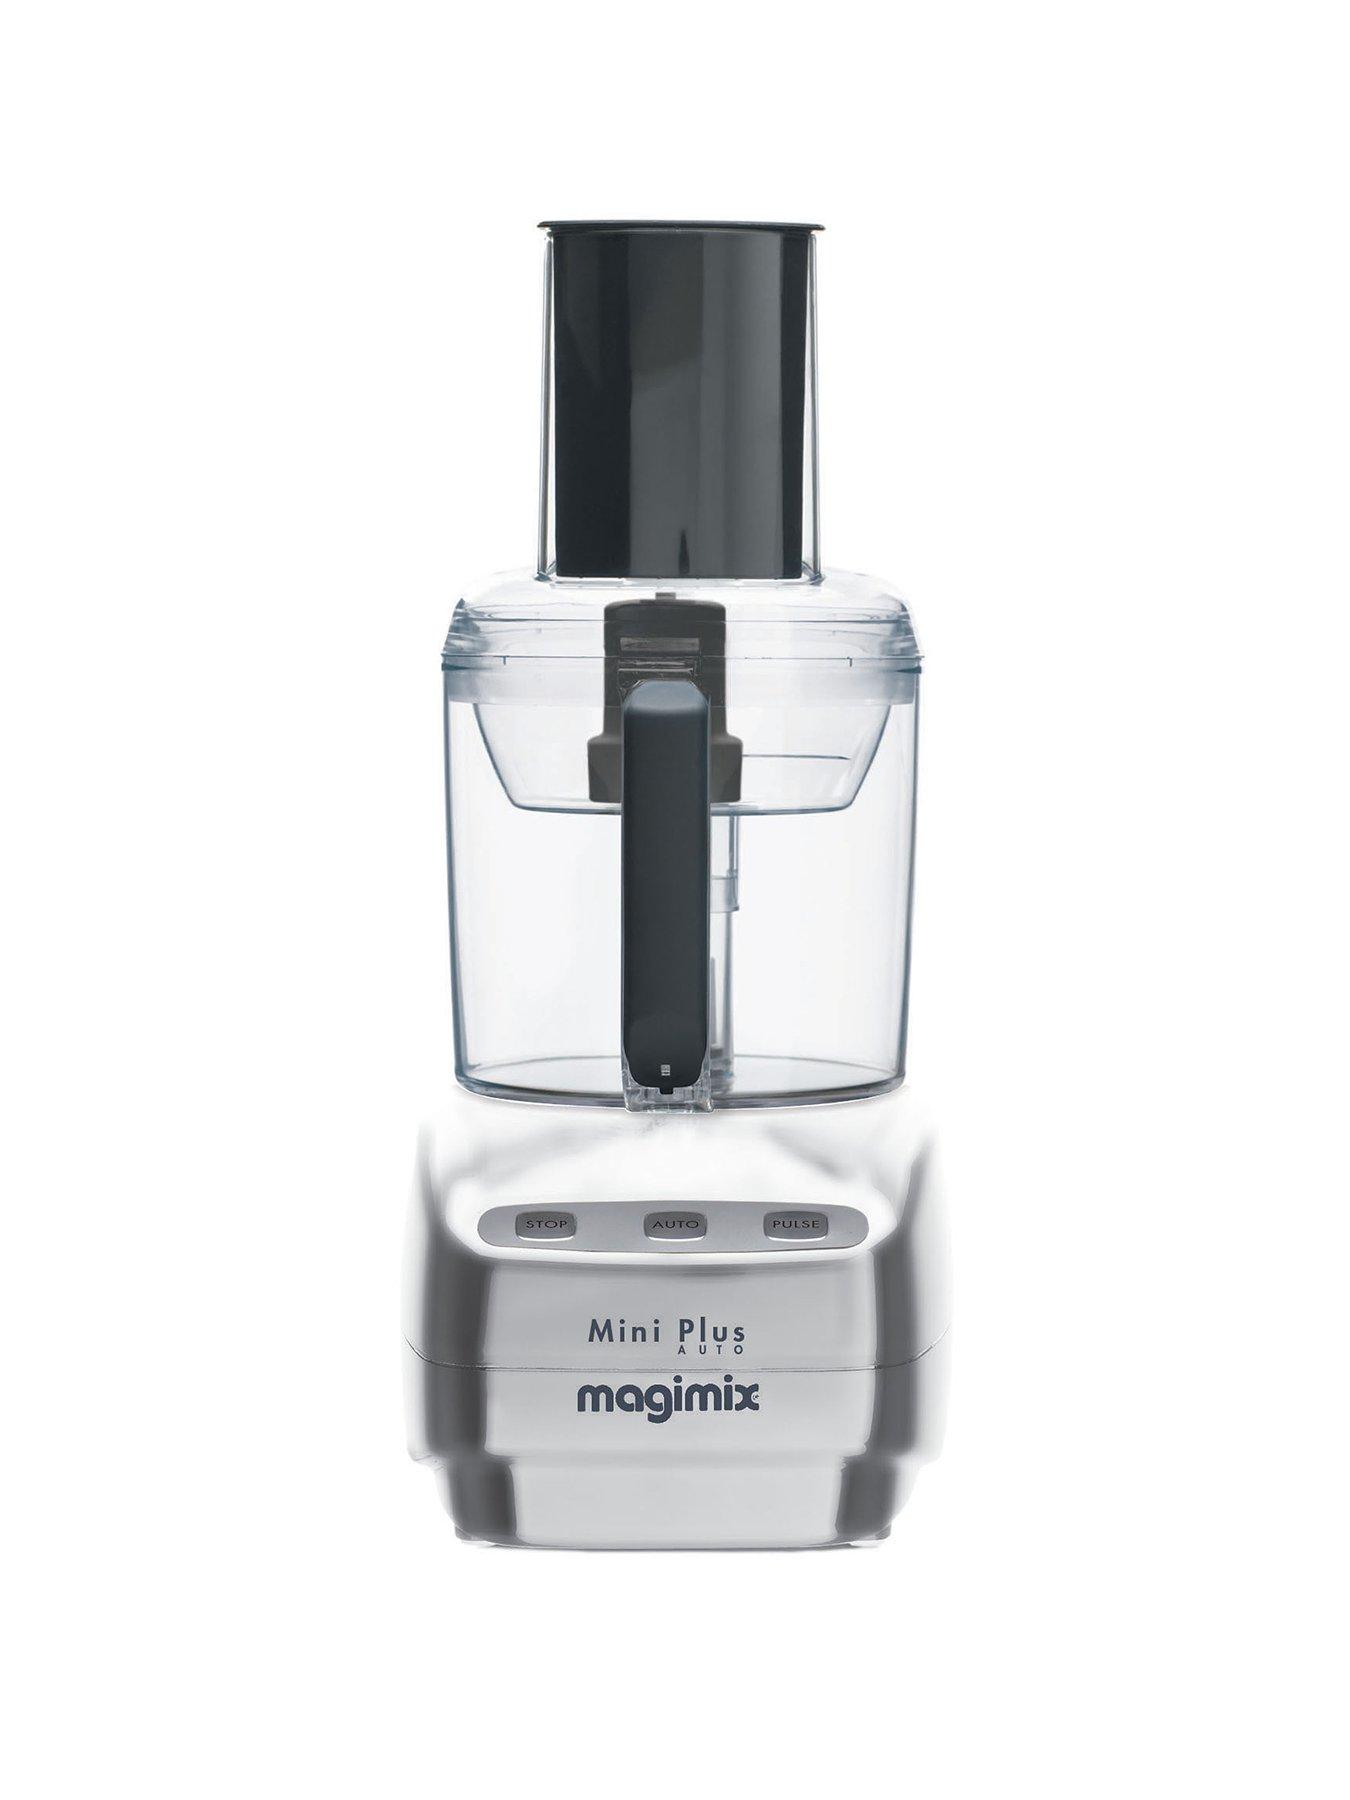 Magimix Le Mini Plus Blendermix Food Processor – Satin